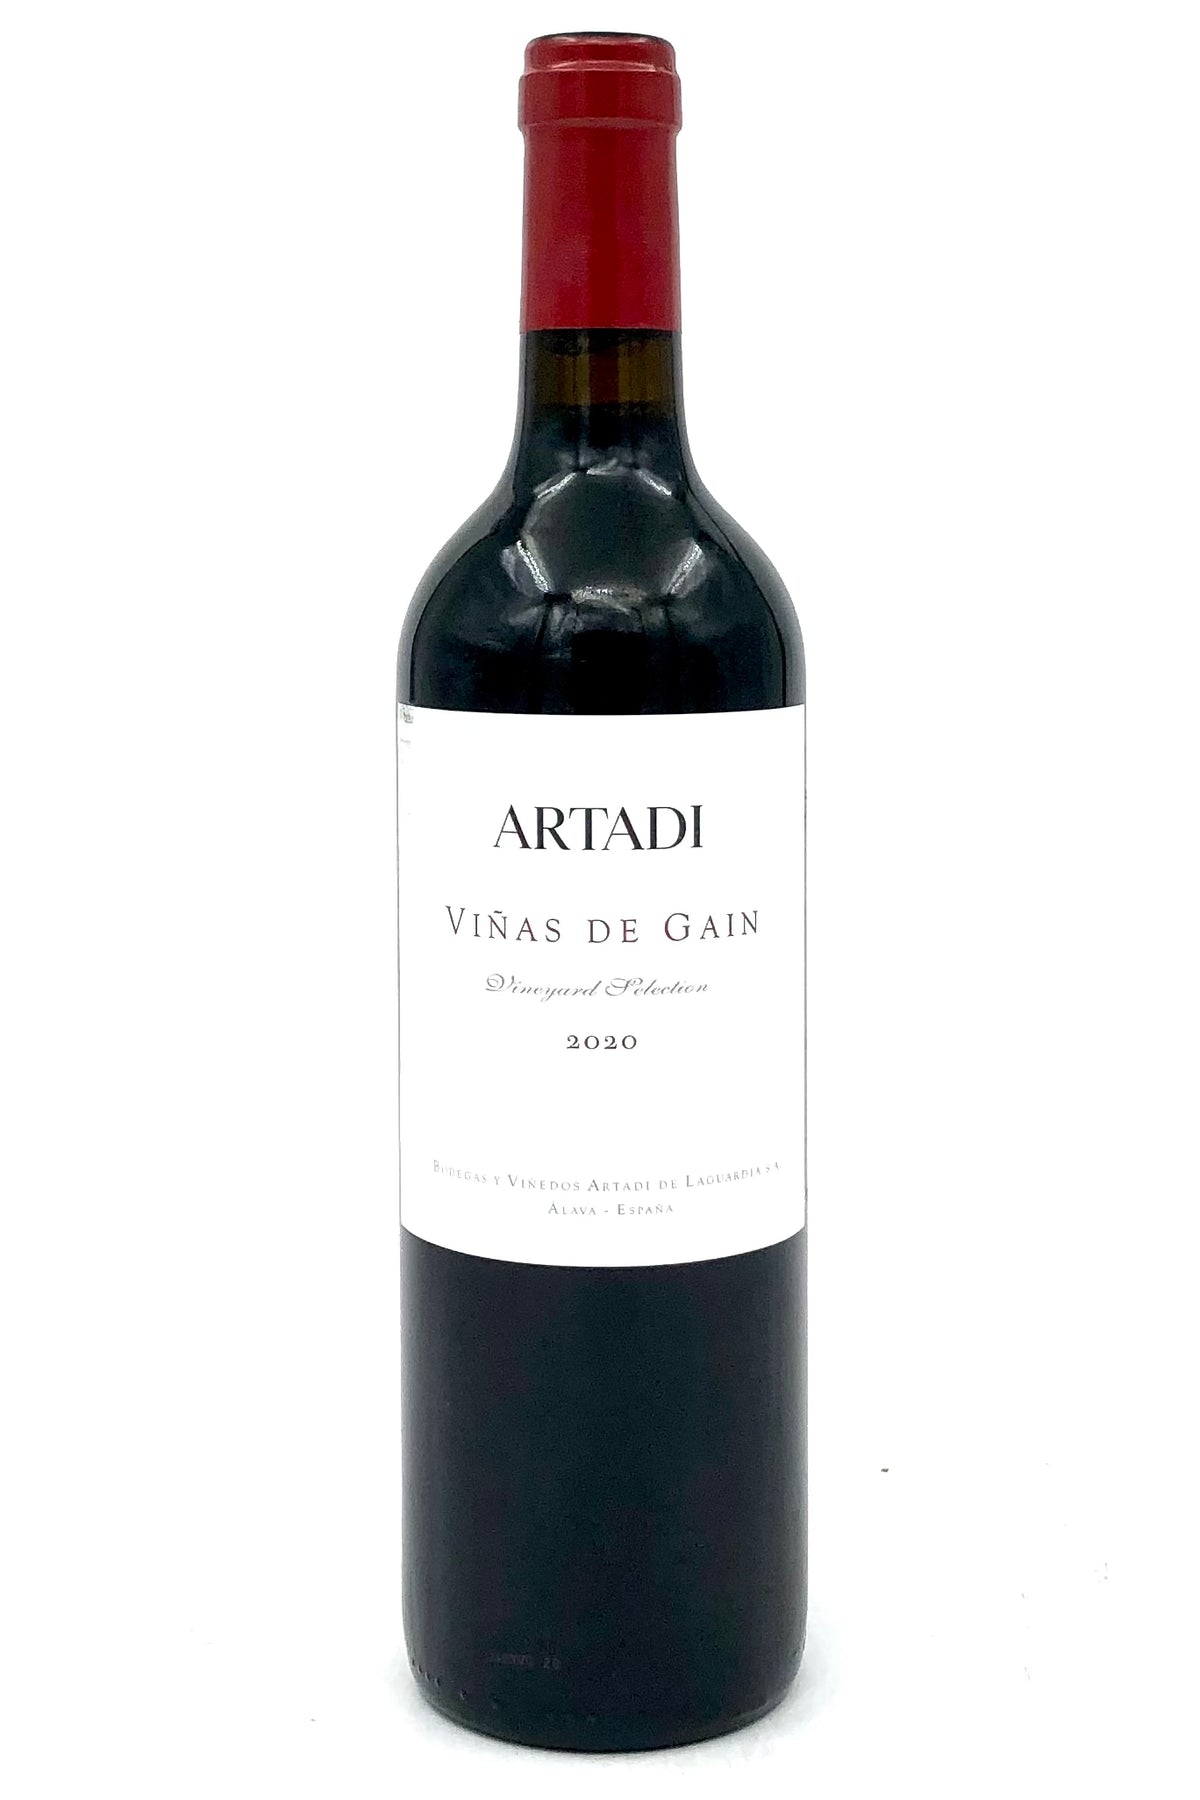 Artadi 2020 Viñas de Gaín Vineyard Selection